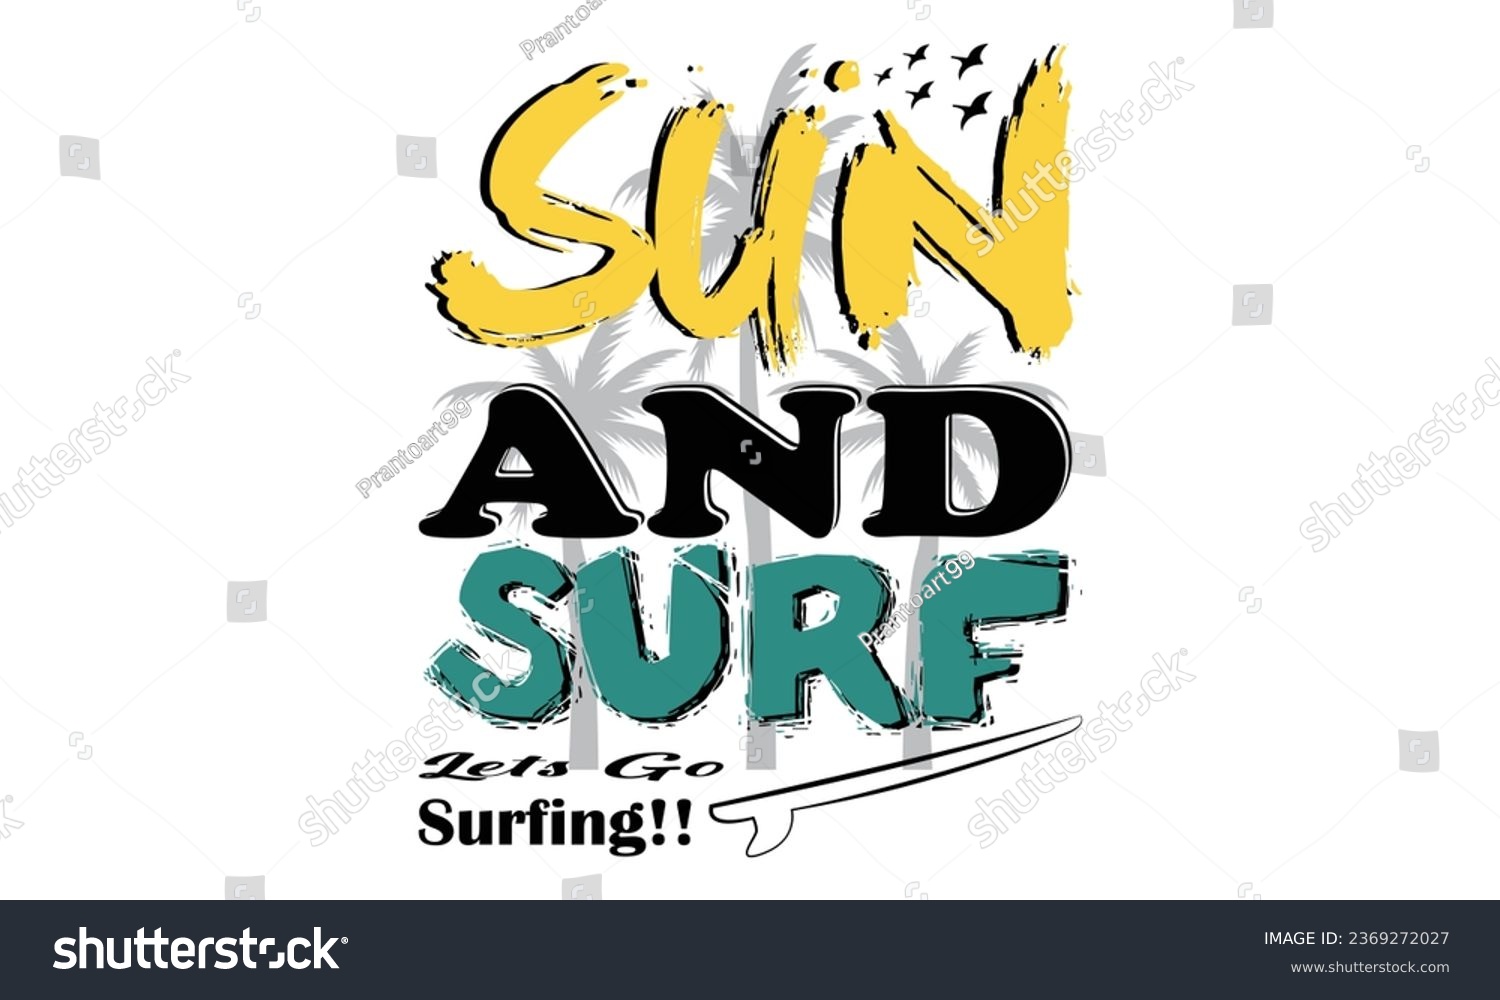 SVG of Sun and Surf Let’s go Surfing Beach California Design,
California Surfing Boats Colorful Beach  Illustration Design, Hello, Summer California Beach Vector T-shirt Design. svg